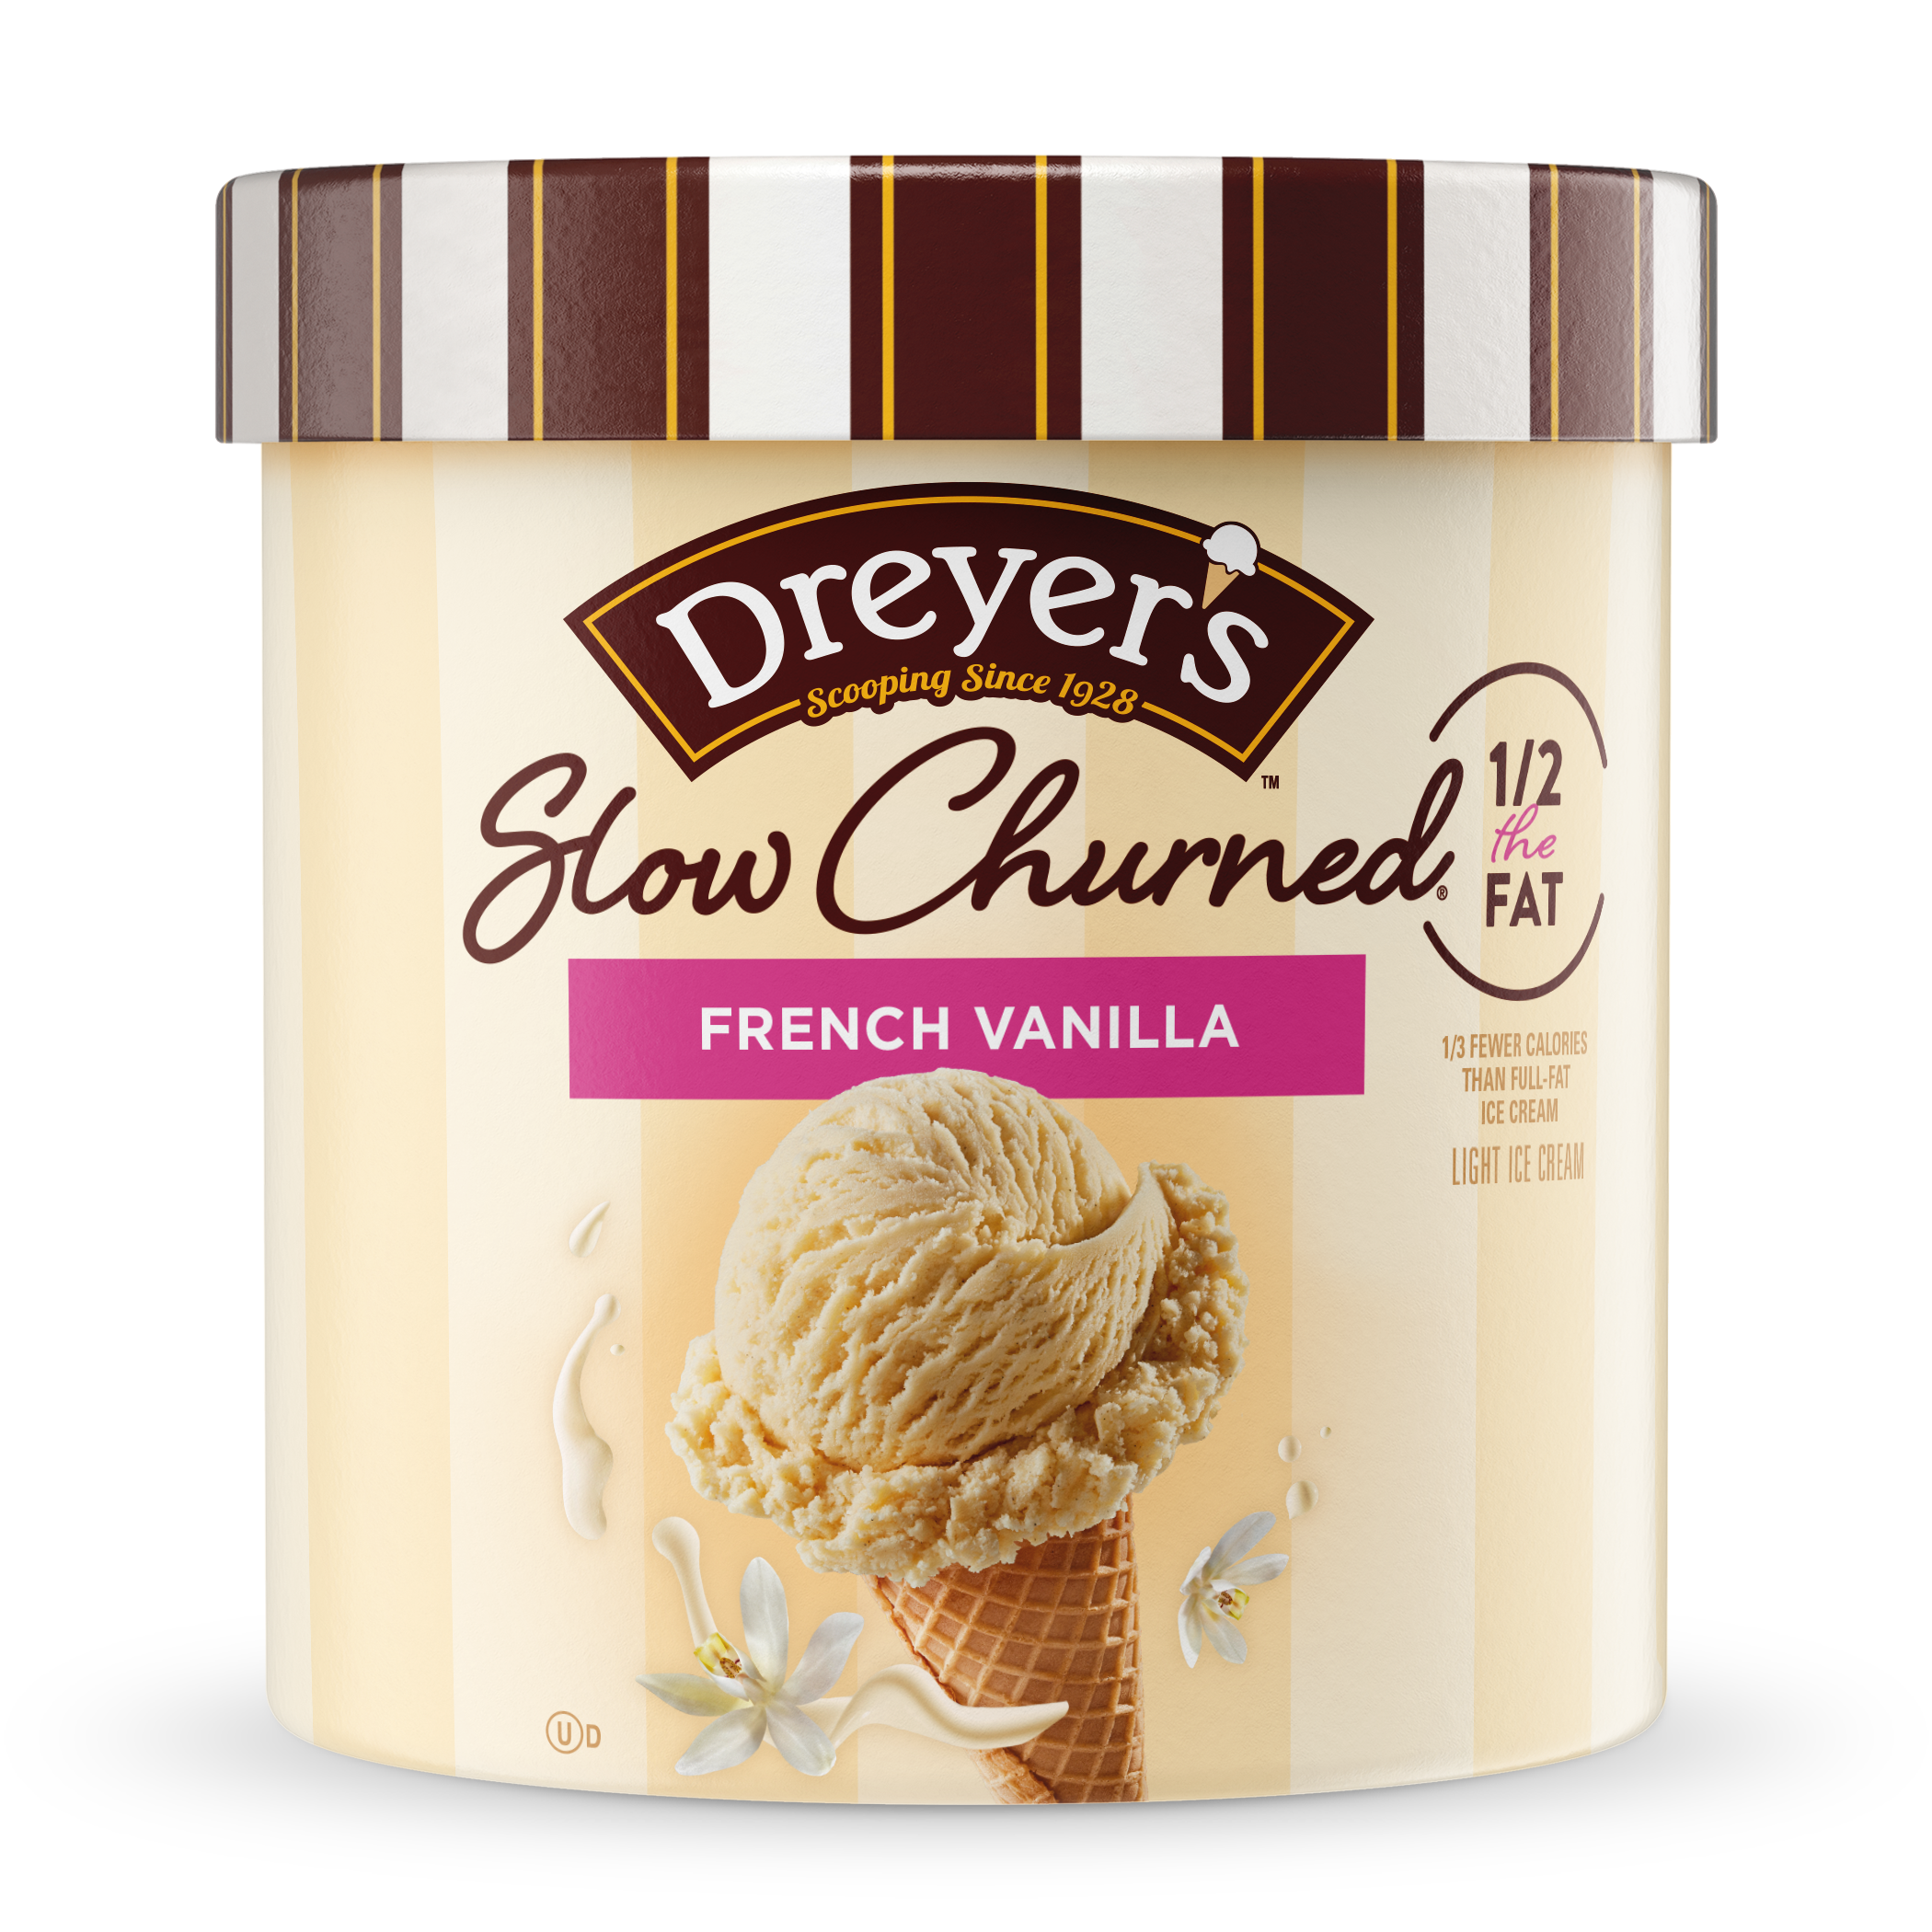 Carton of Dreyer's slow-churned French vanilla ice cream